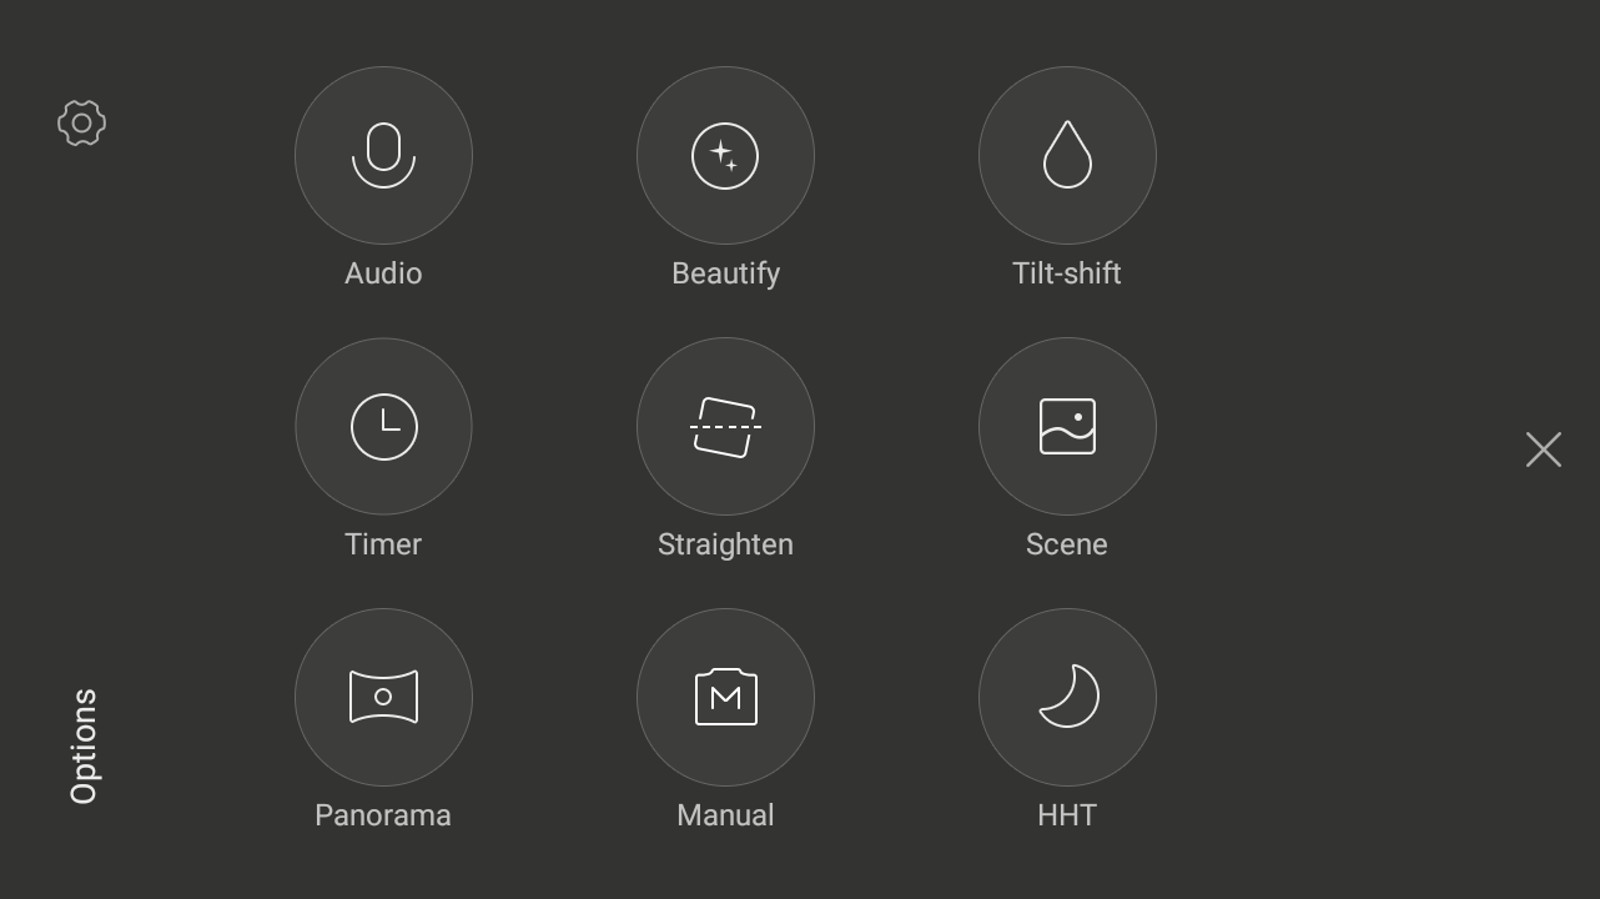 Modes in the Xiaomi camera app.